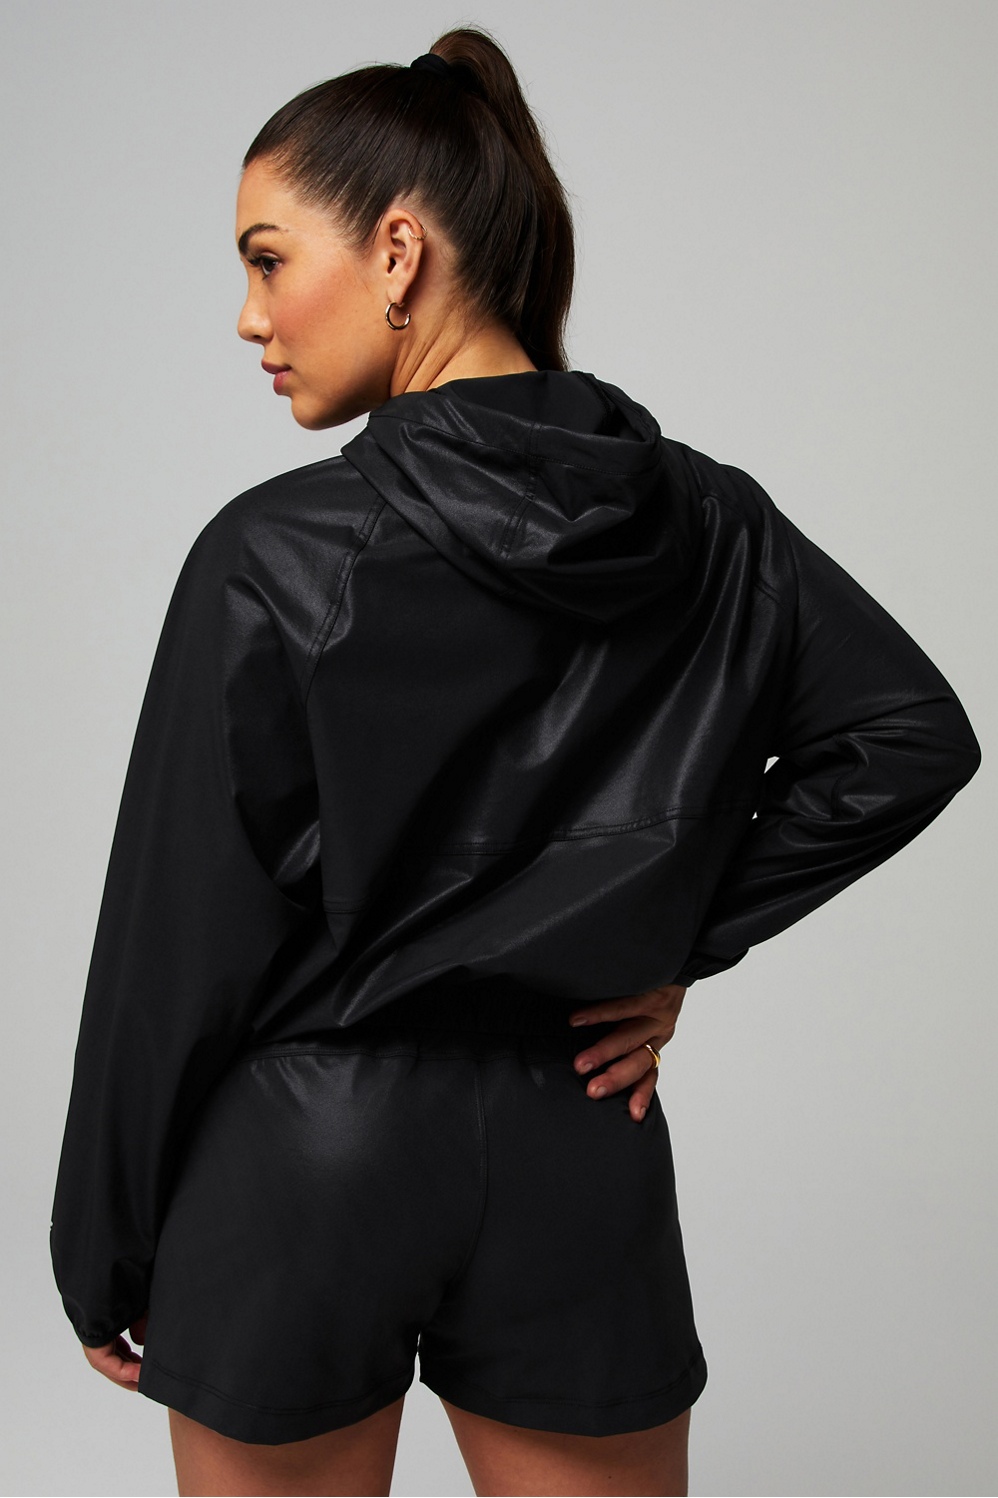 Fabletics Adriana Woven Boxy Lightweight Hooded Windbreaker Jacket Size XL  Black - $18 - From Christine